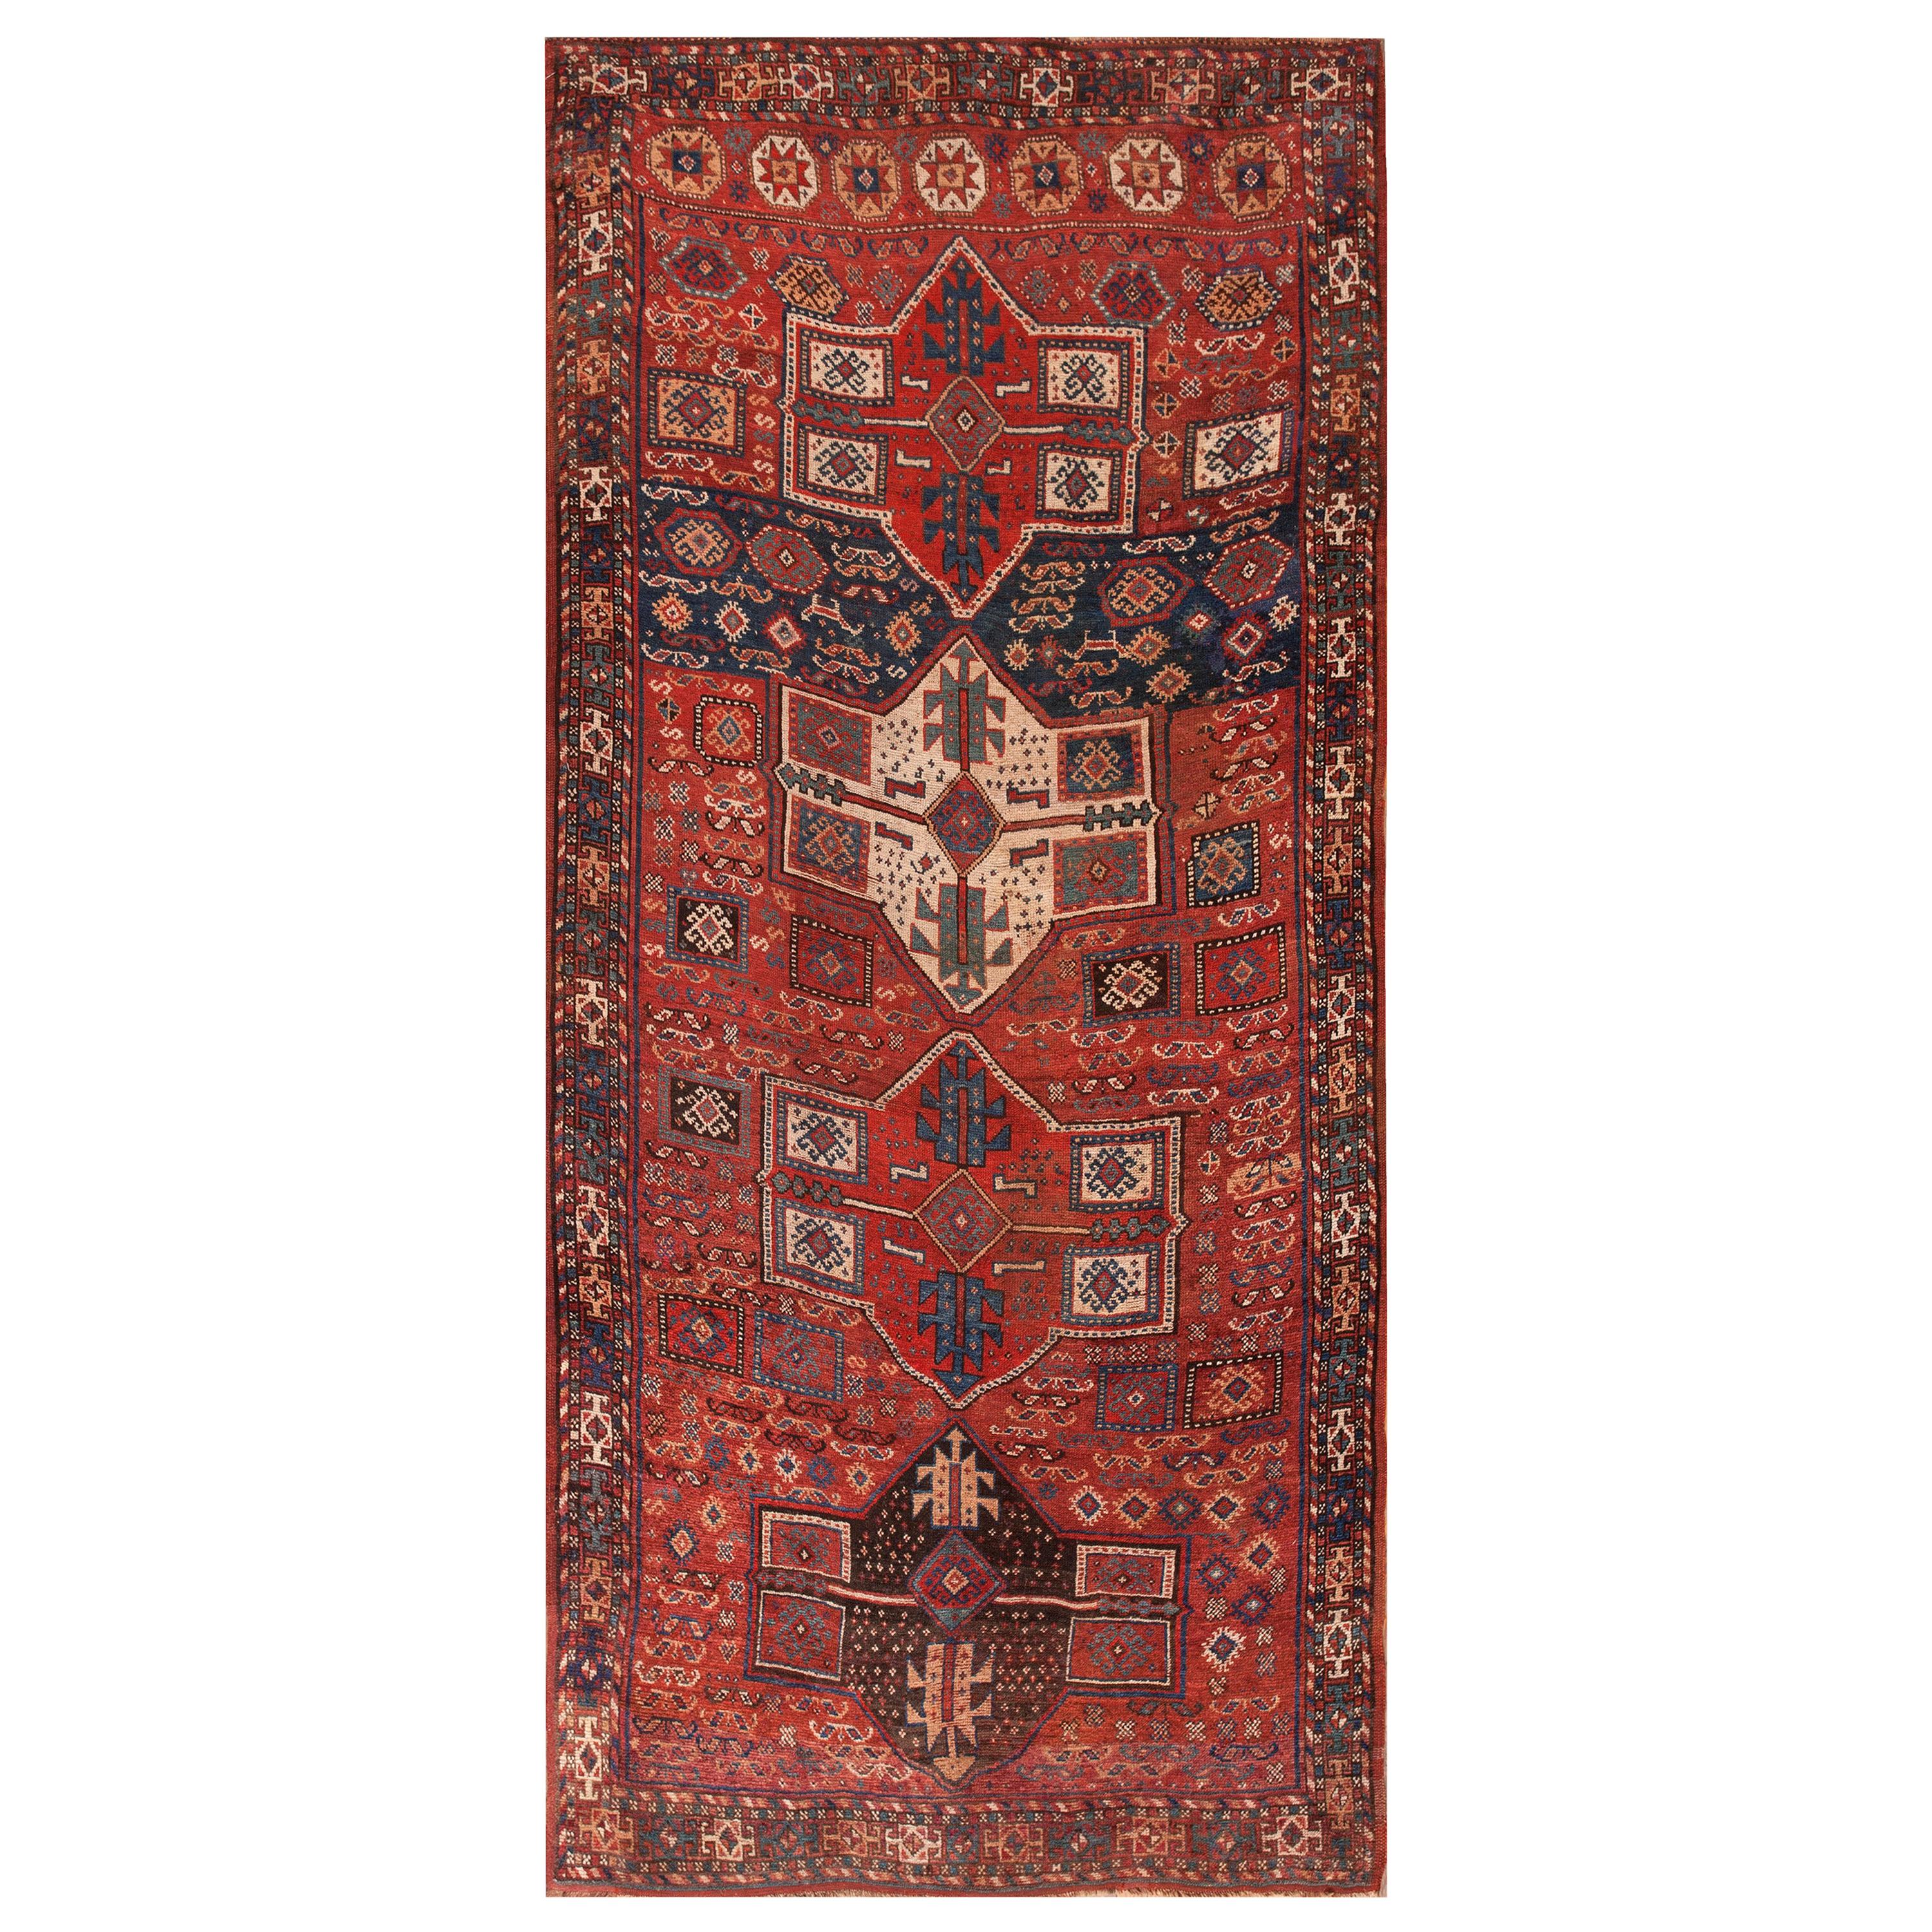 19th Century N.E. Persian Kurdish Quchan Carpet ( 5'8" x 12'2" - 173 x 371 )